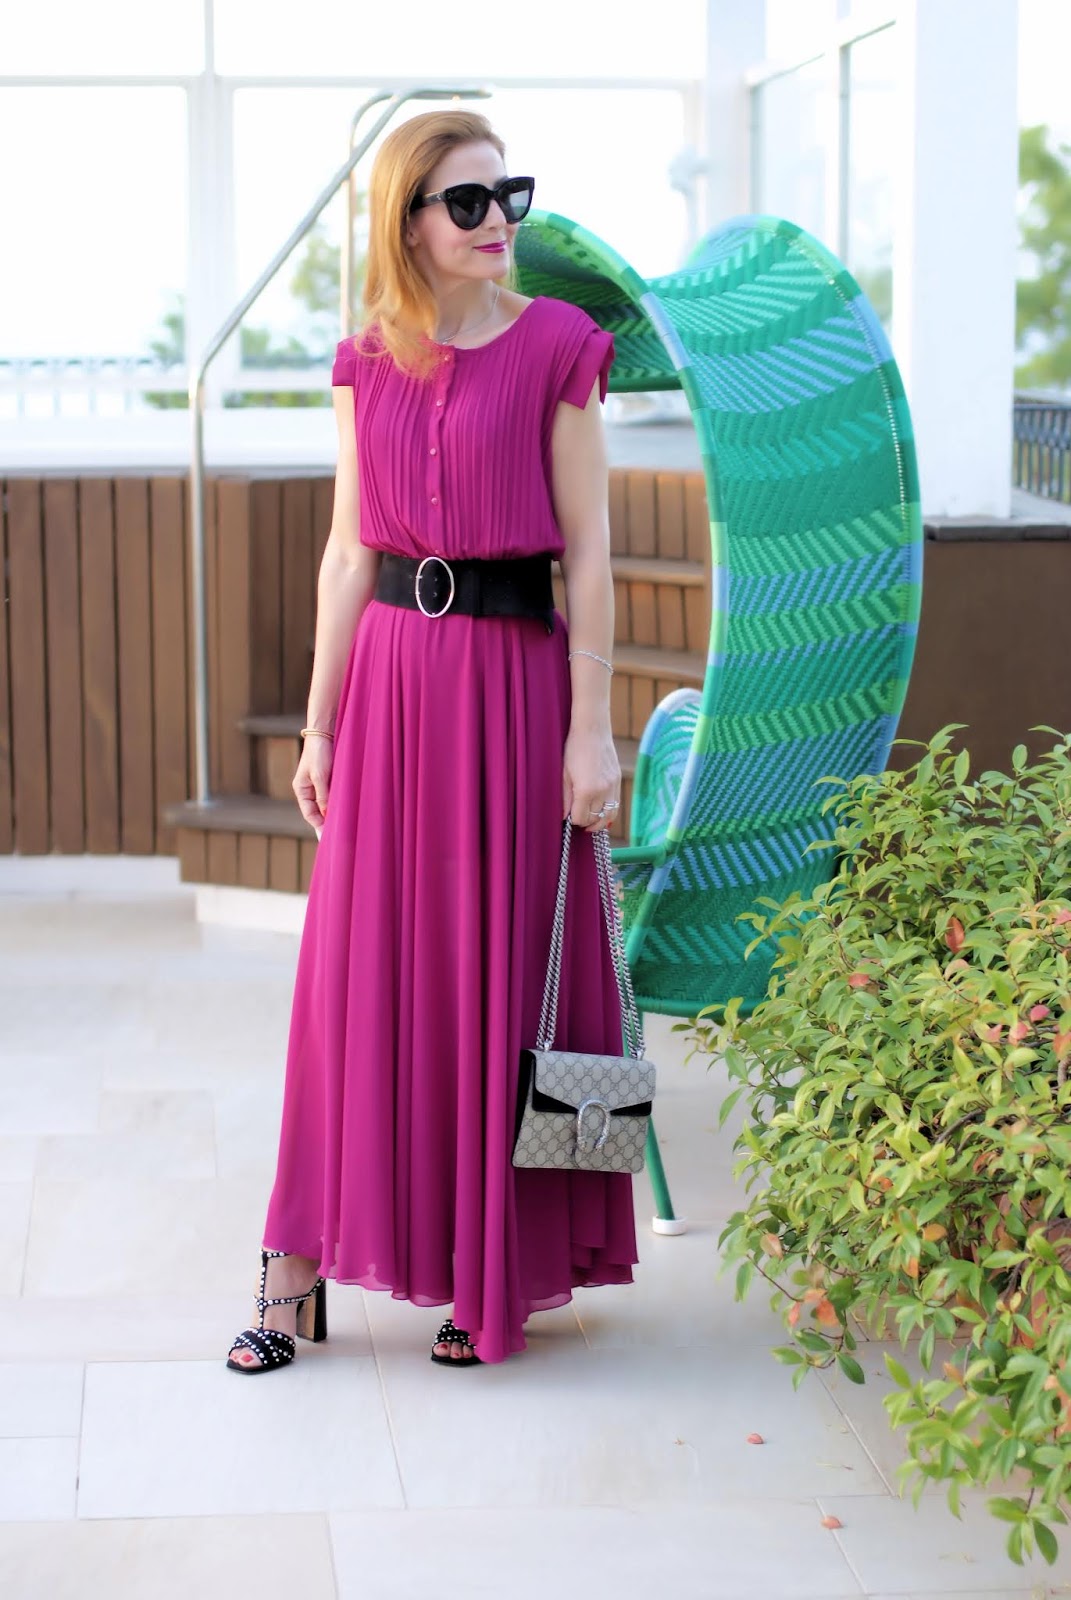 Raspberry chiffon maxi dress by Zahir on Fashion and Cookies fashion blog, fashion blogger style